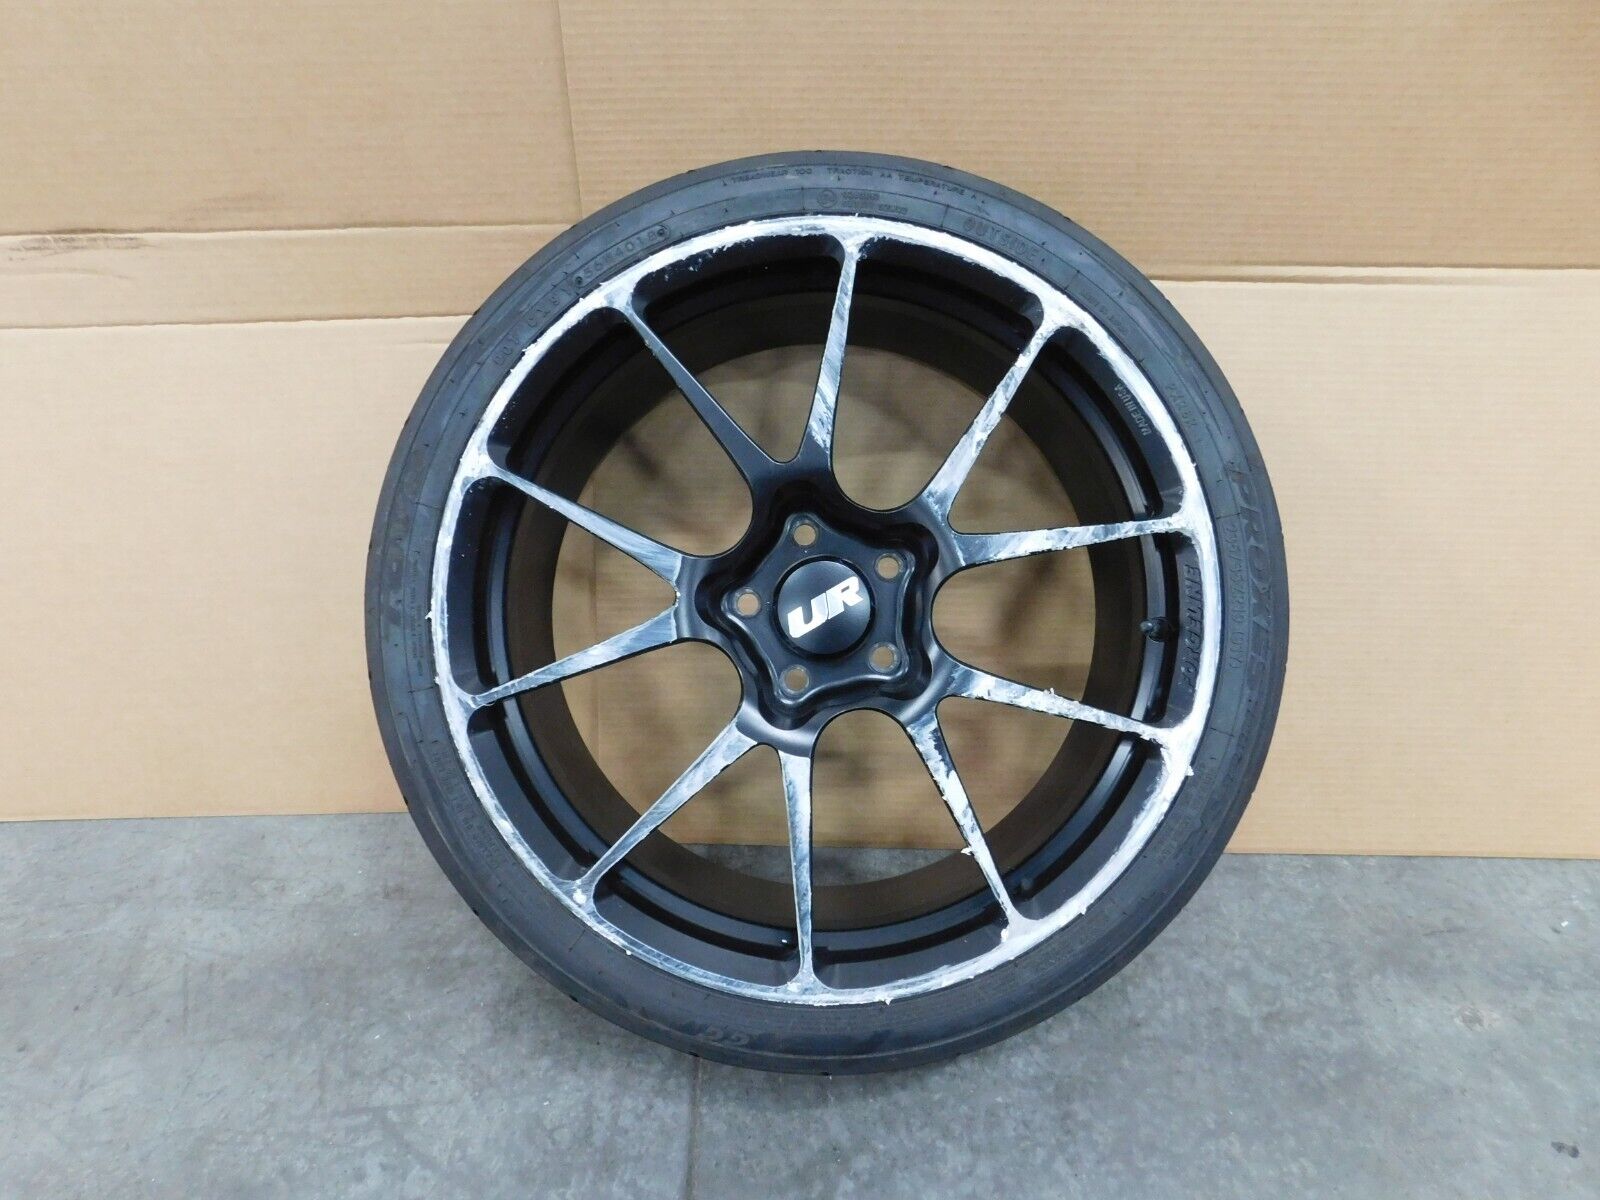 2013 Lamborghini Gallardo LP570-4 DMG Front Forgeline Wheel / Toyo Tire #3617 W2